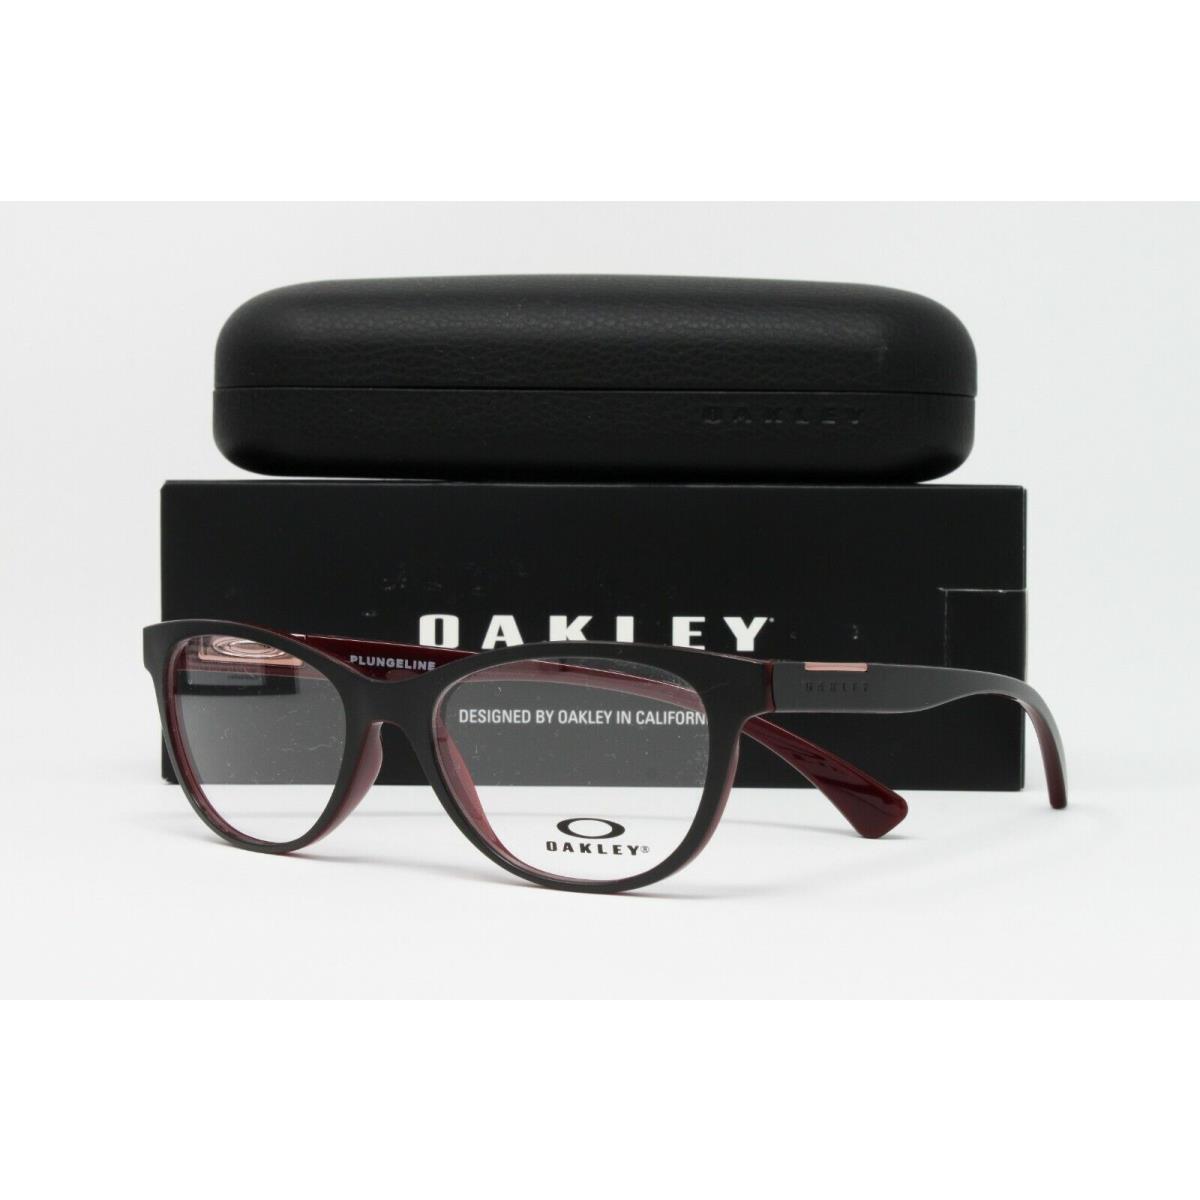 Oakley Optical Plungeline OX8146 04 Satin Black Brick Red Eyeglasses 50mm